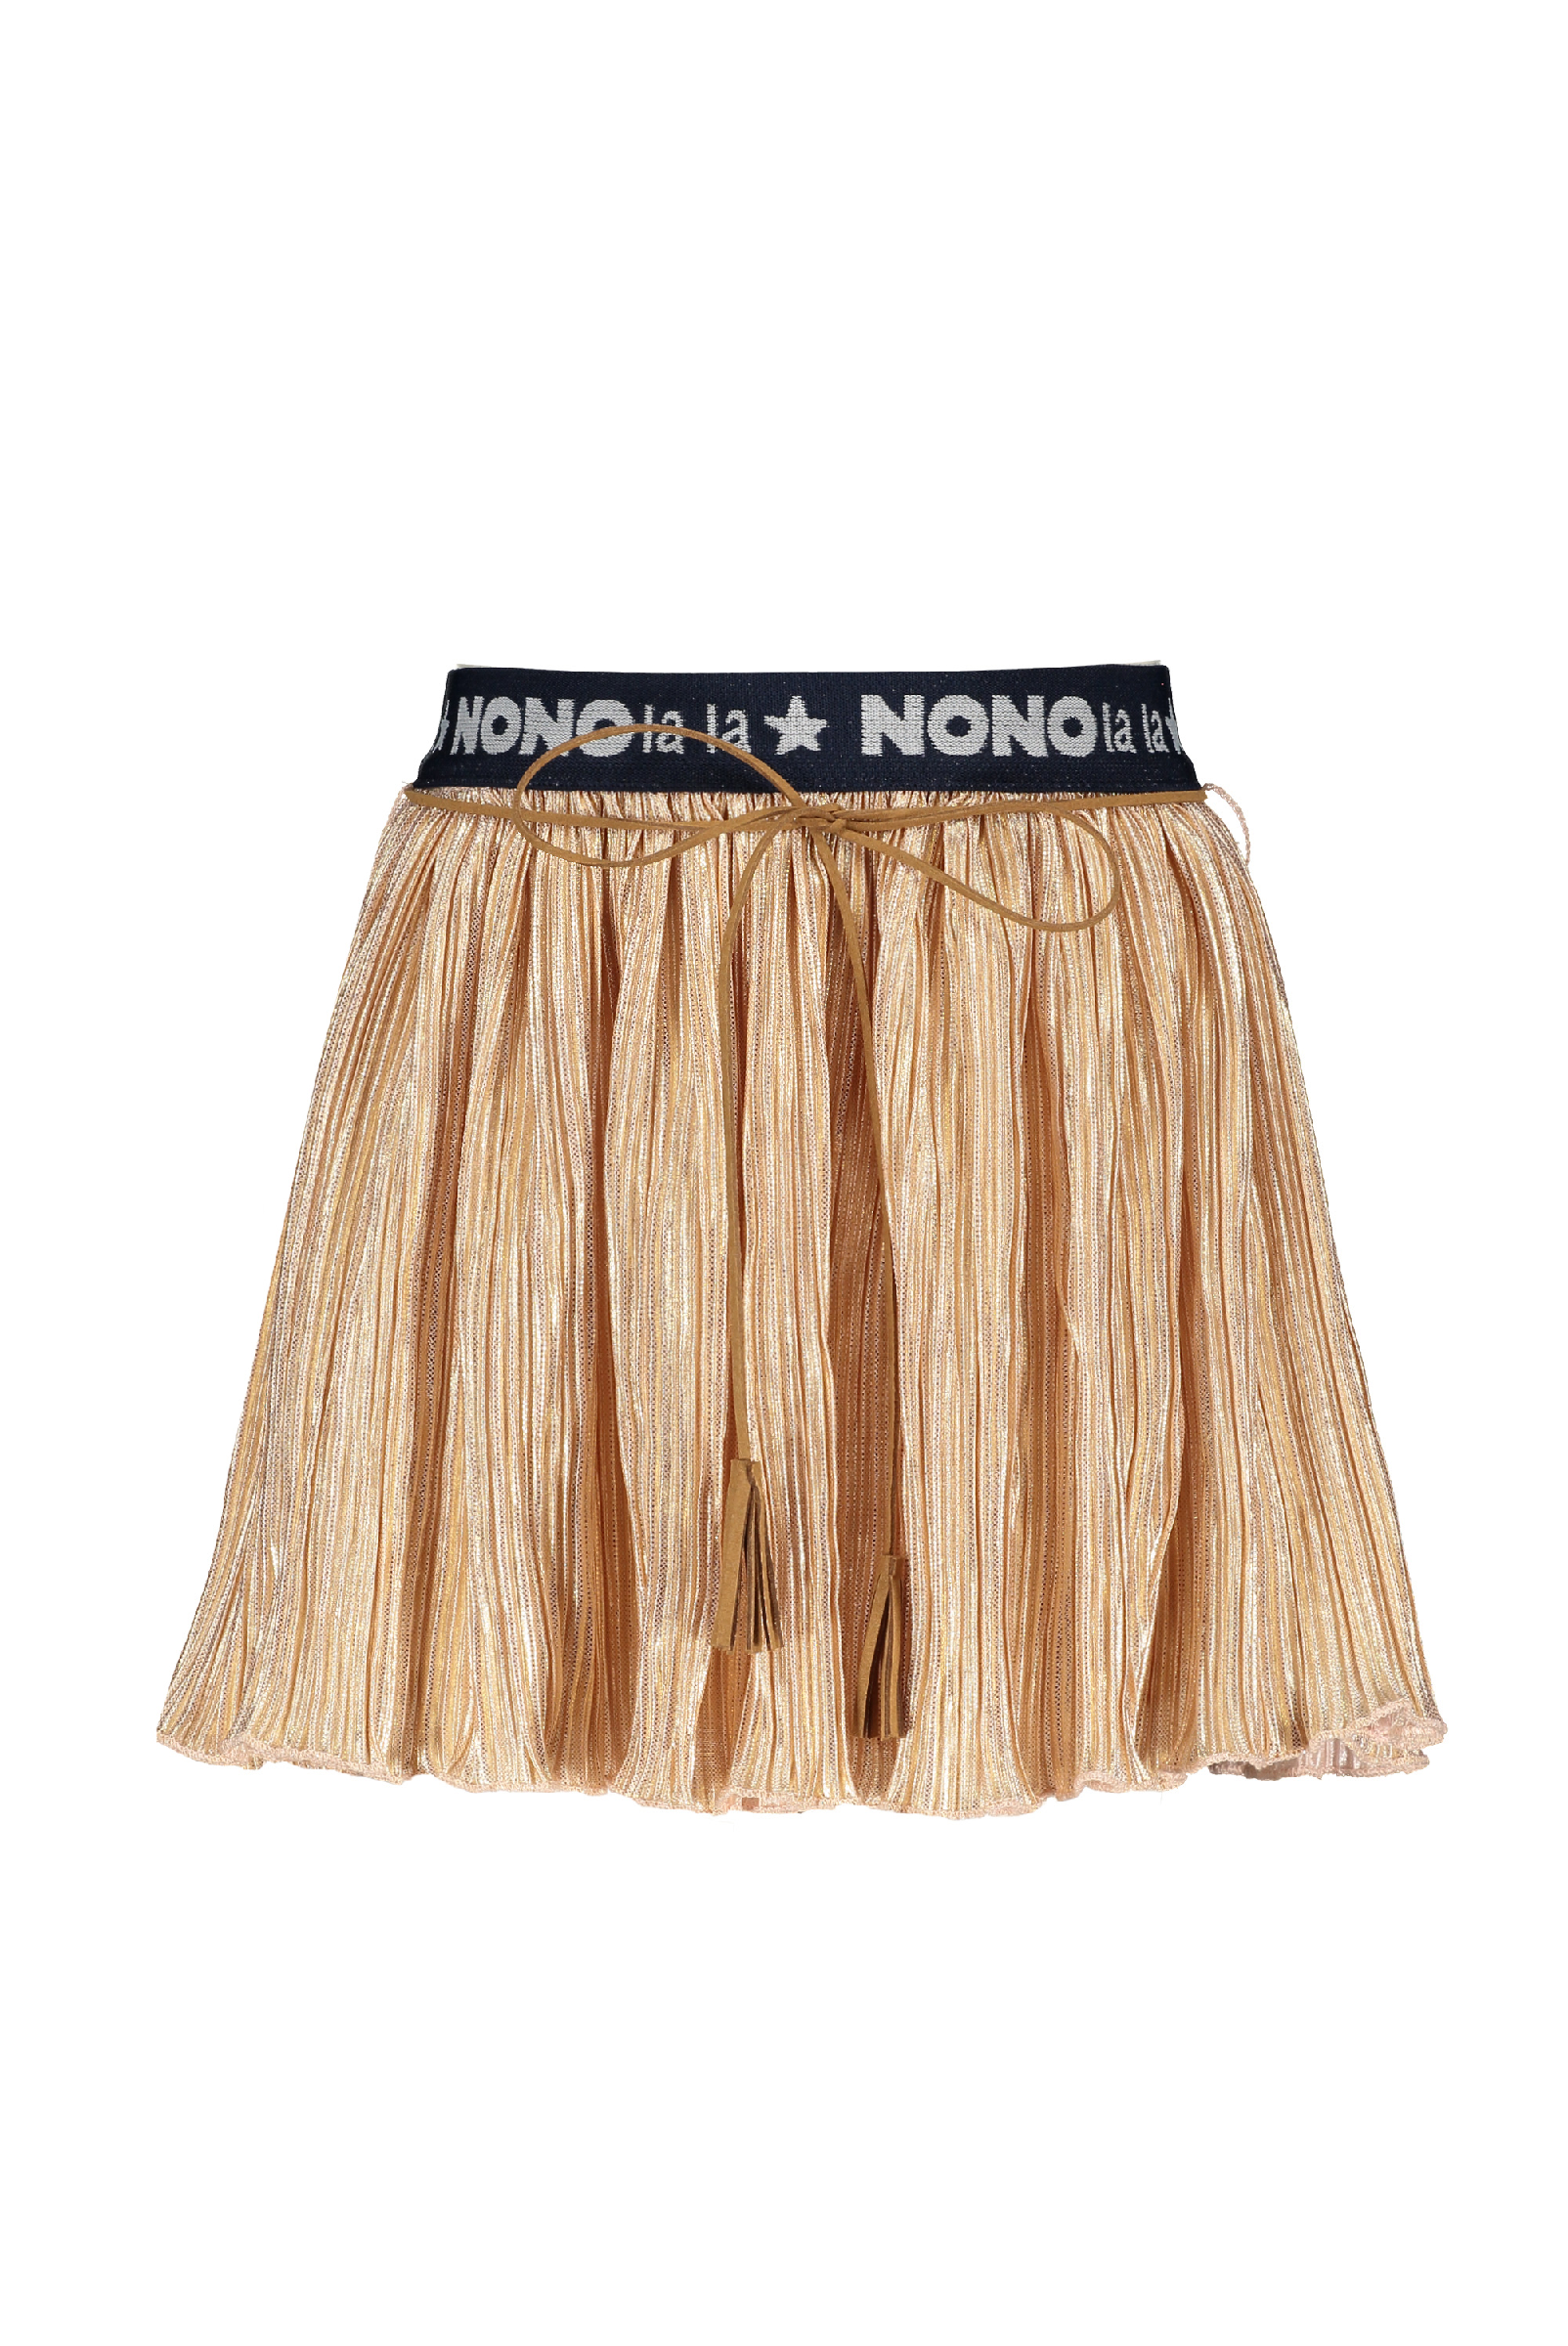 Meisjes Nikky pleated skirt branded waistband van NoNo in de kleur Soft Copper in maat 146, 152.